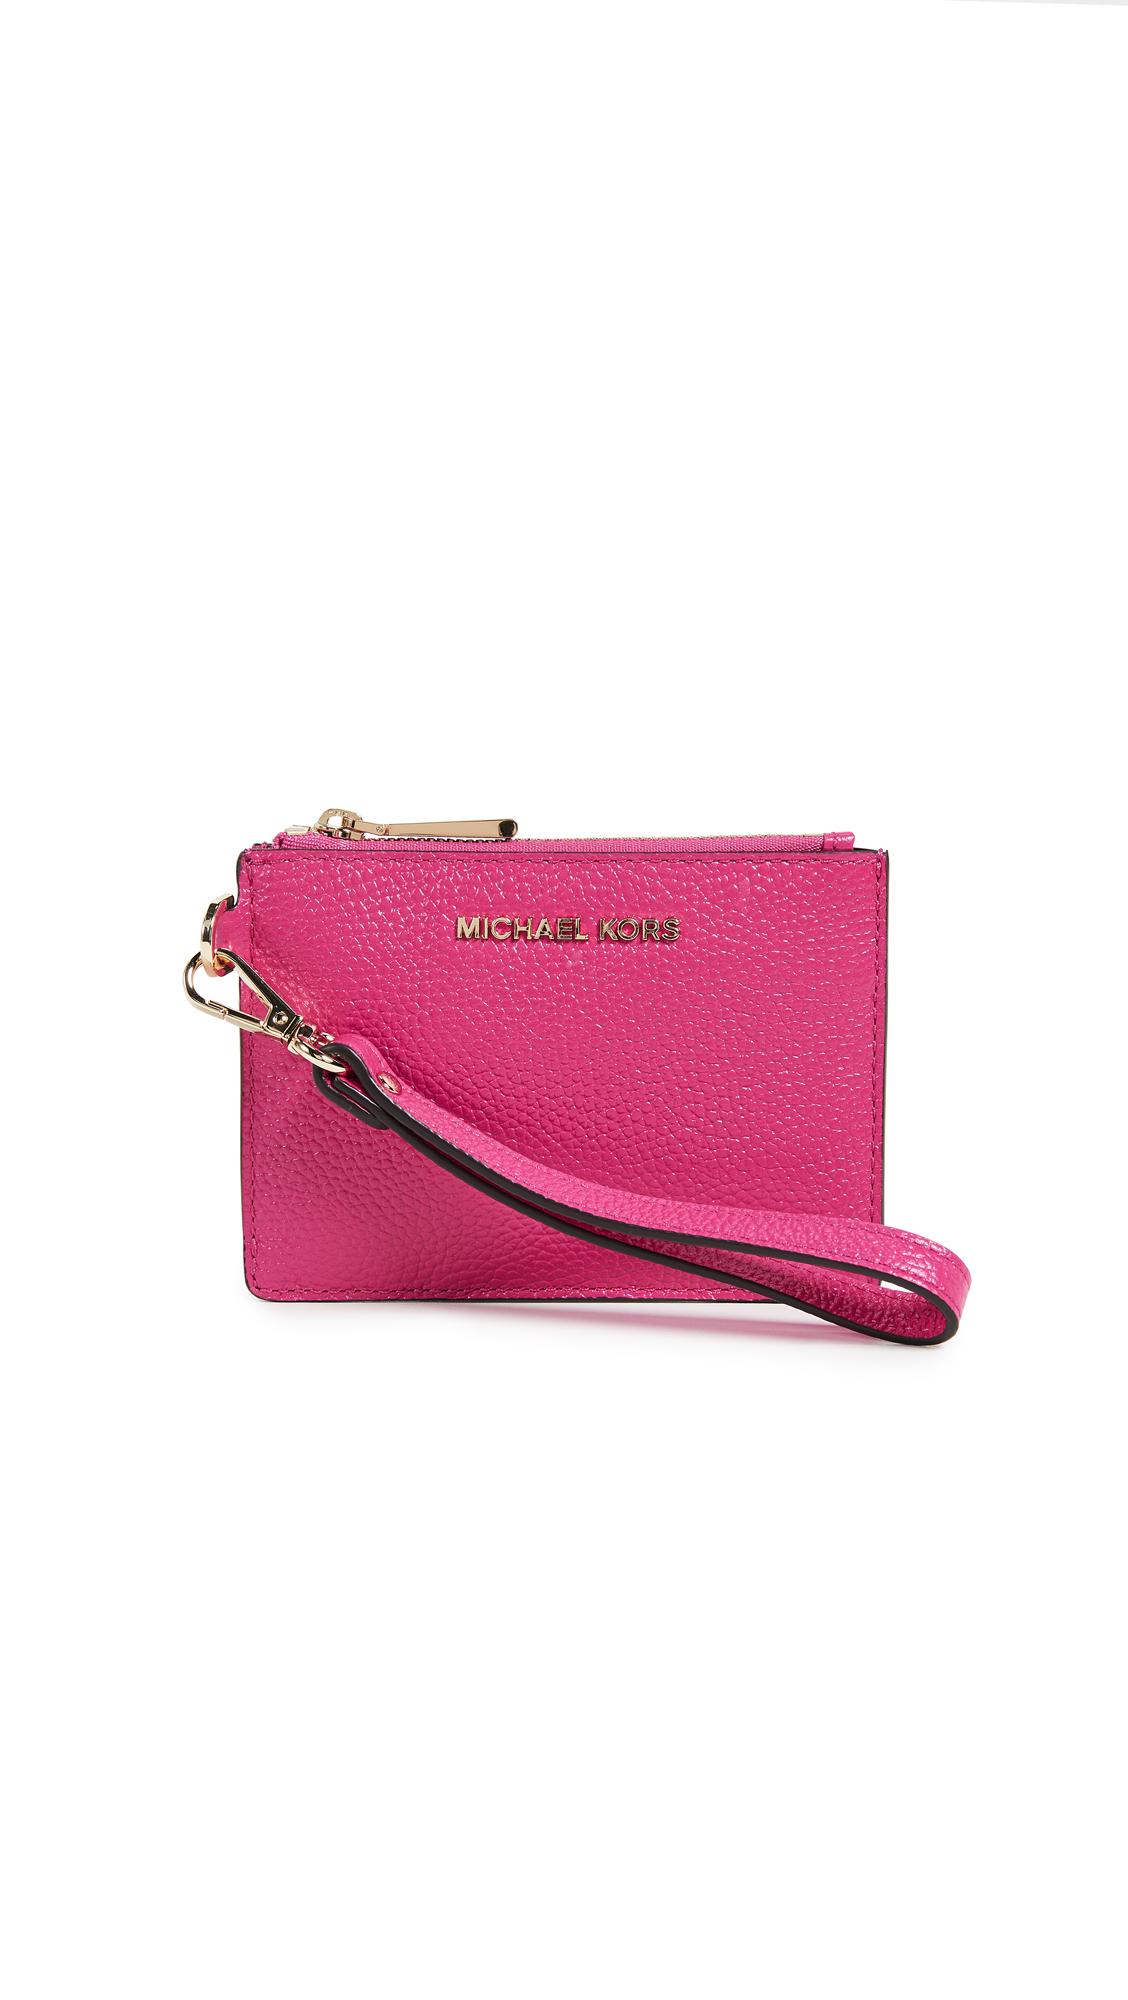 michael kors ultra pink wallet